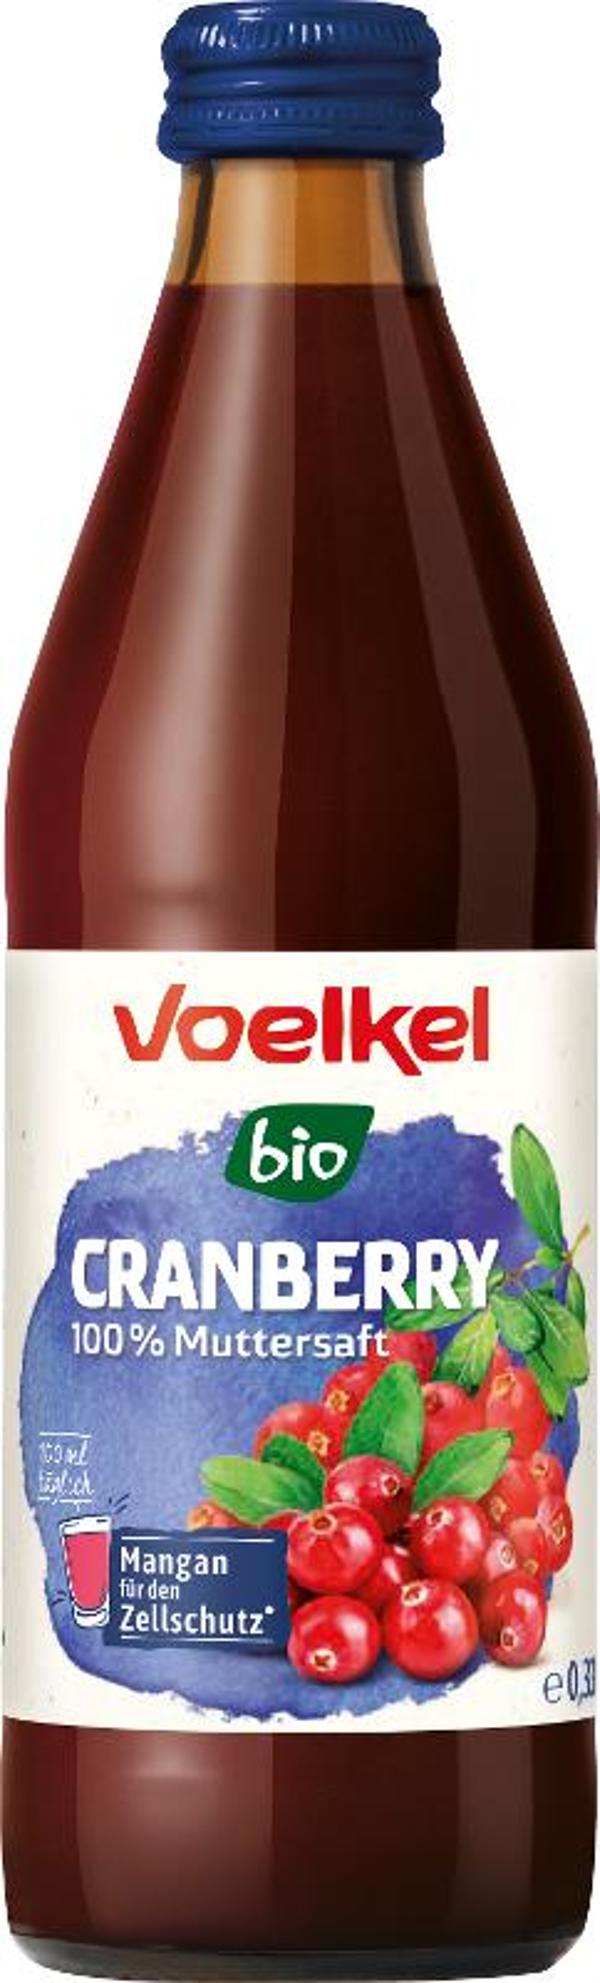 Produktfoto zu Cranberry Muttersaft